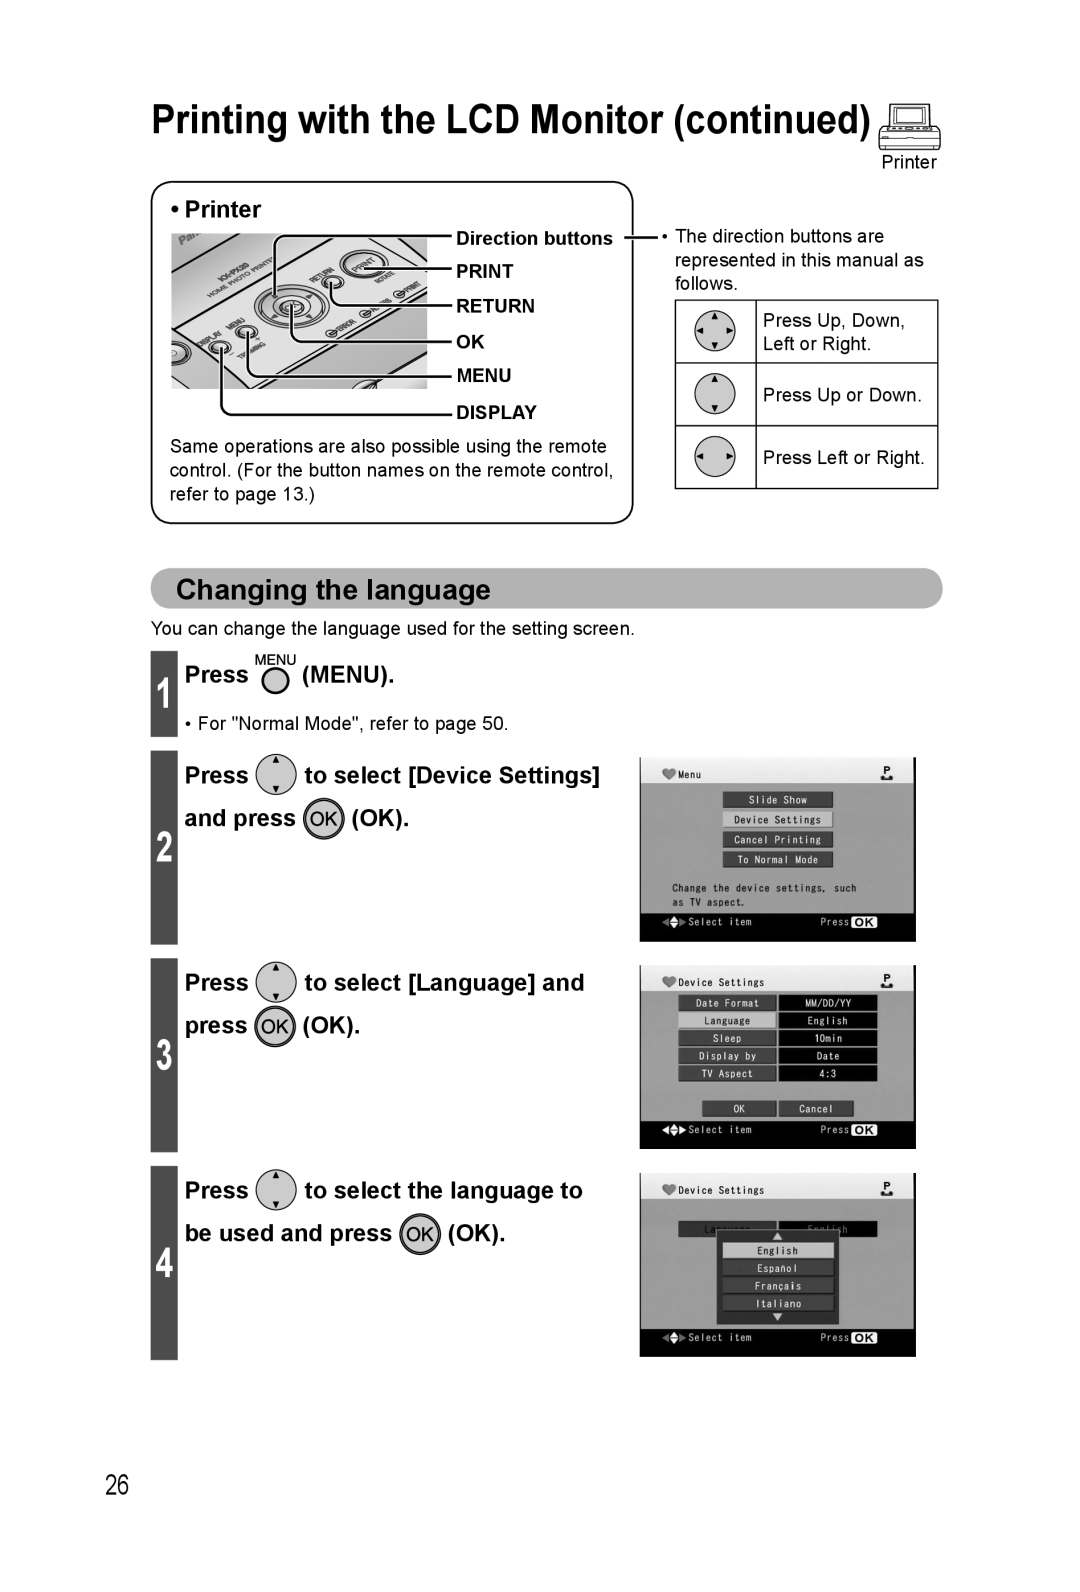 Panasonic KX-PX20M Printing with the LCD Monitor continued, Changing the language, Press MENU, Printer 